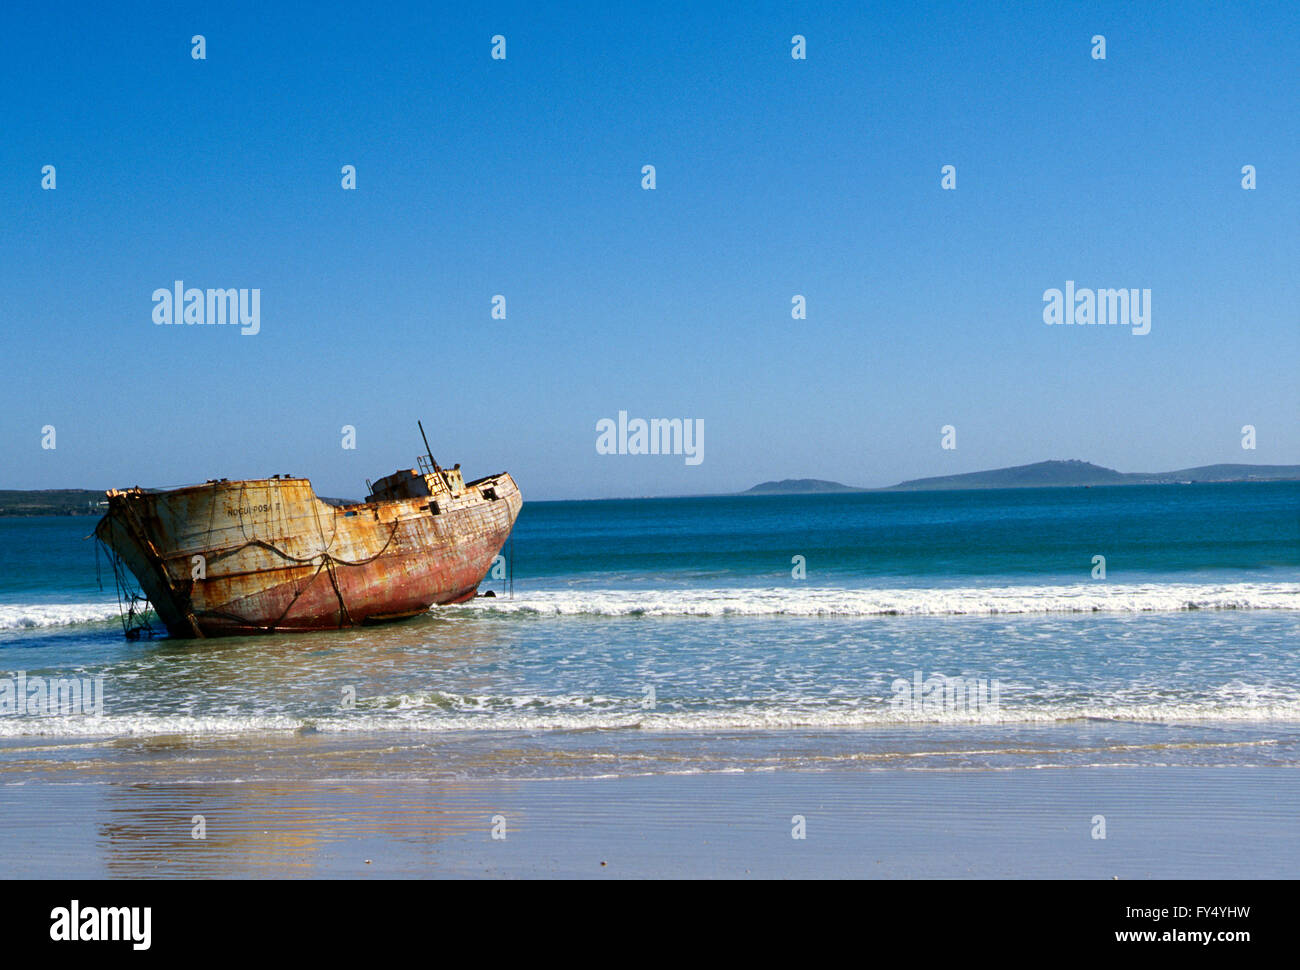 Alte verlassene Schiffswrack; Kapstadt Strand; Kap-Halbinsel; Südafrika Stockfoto